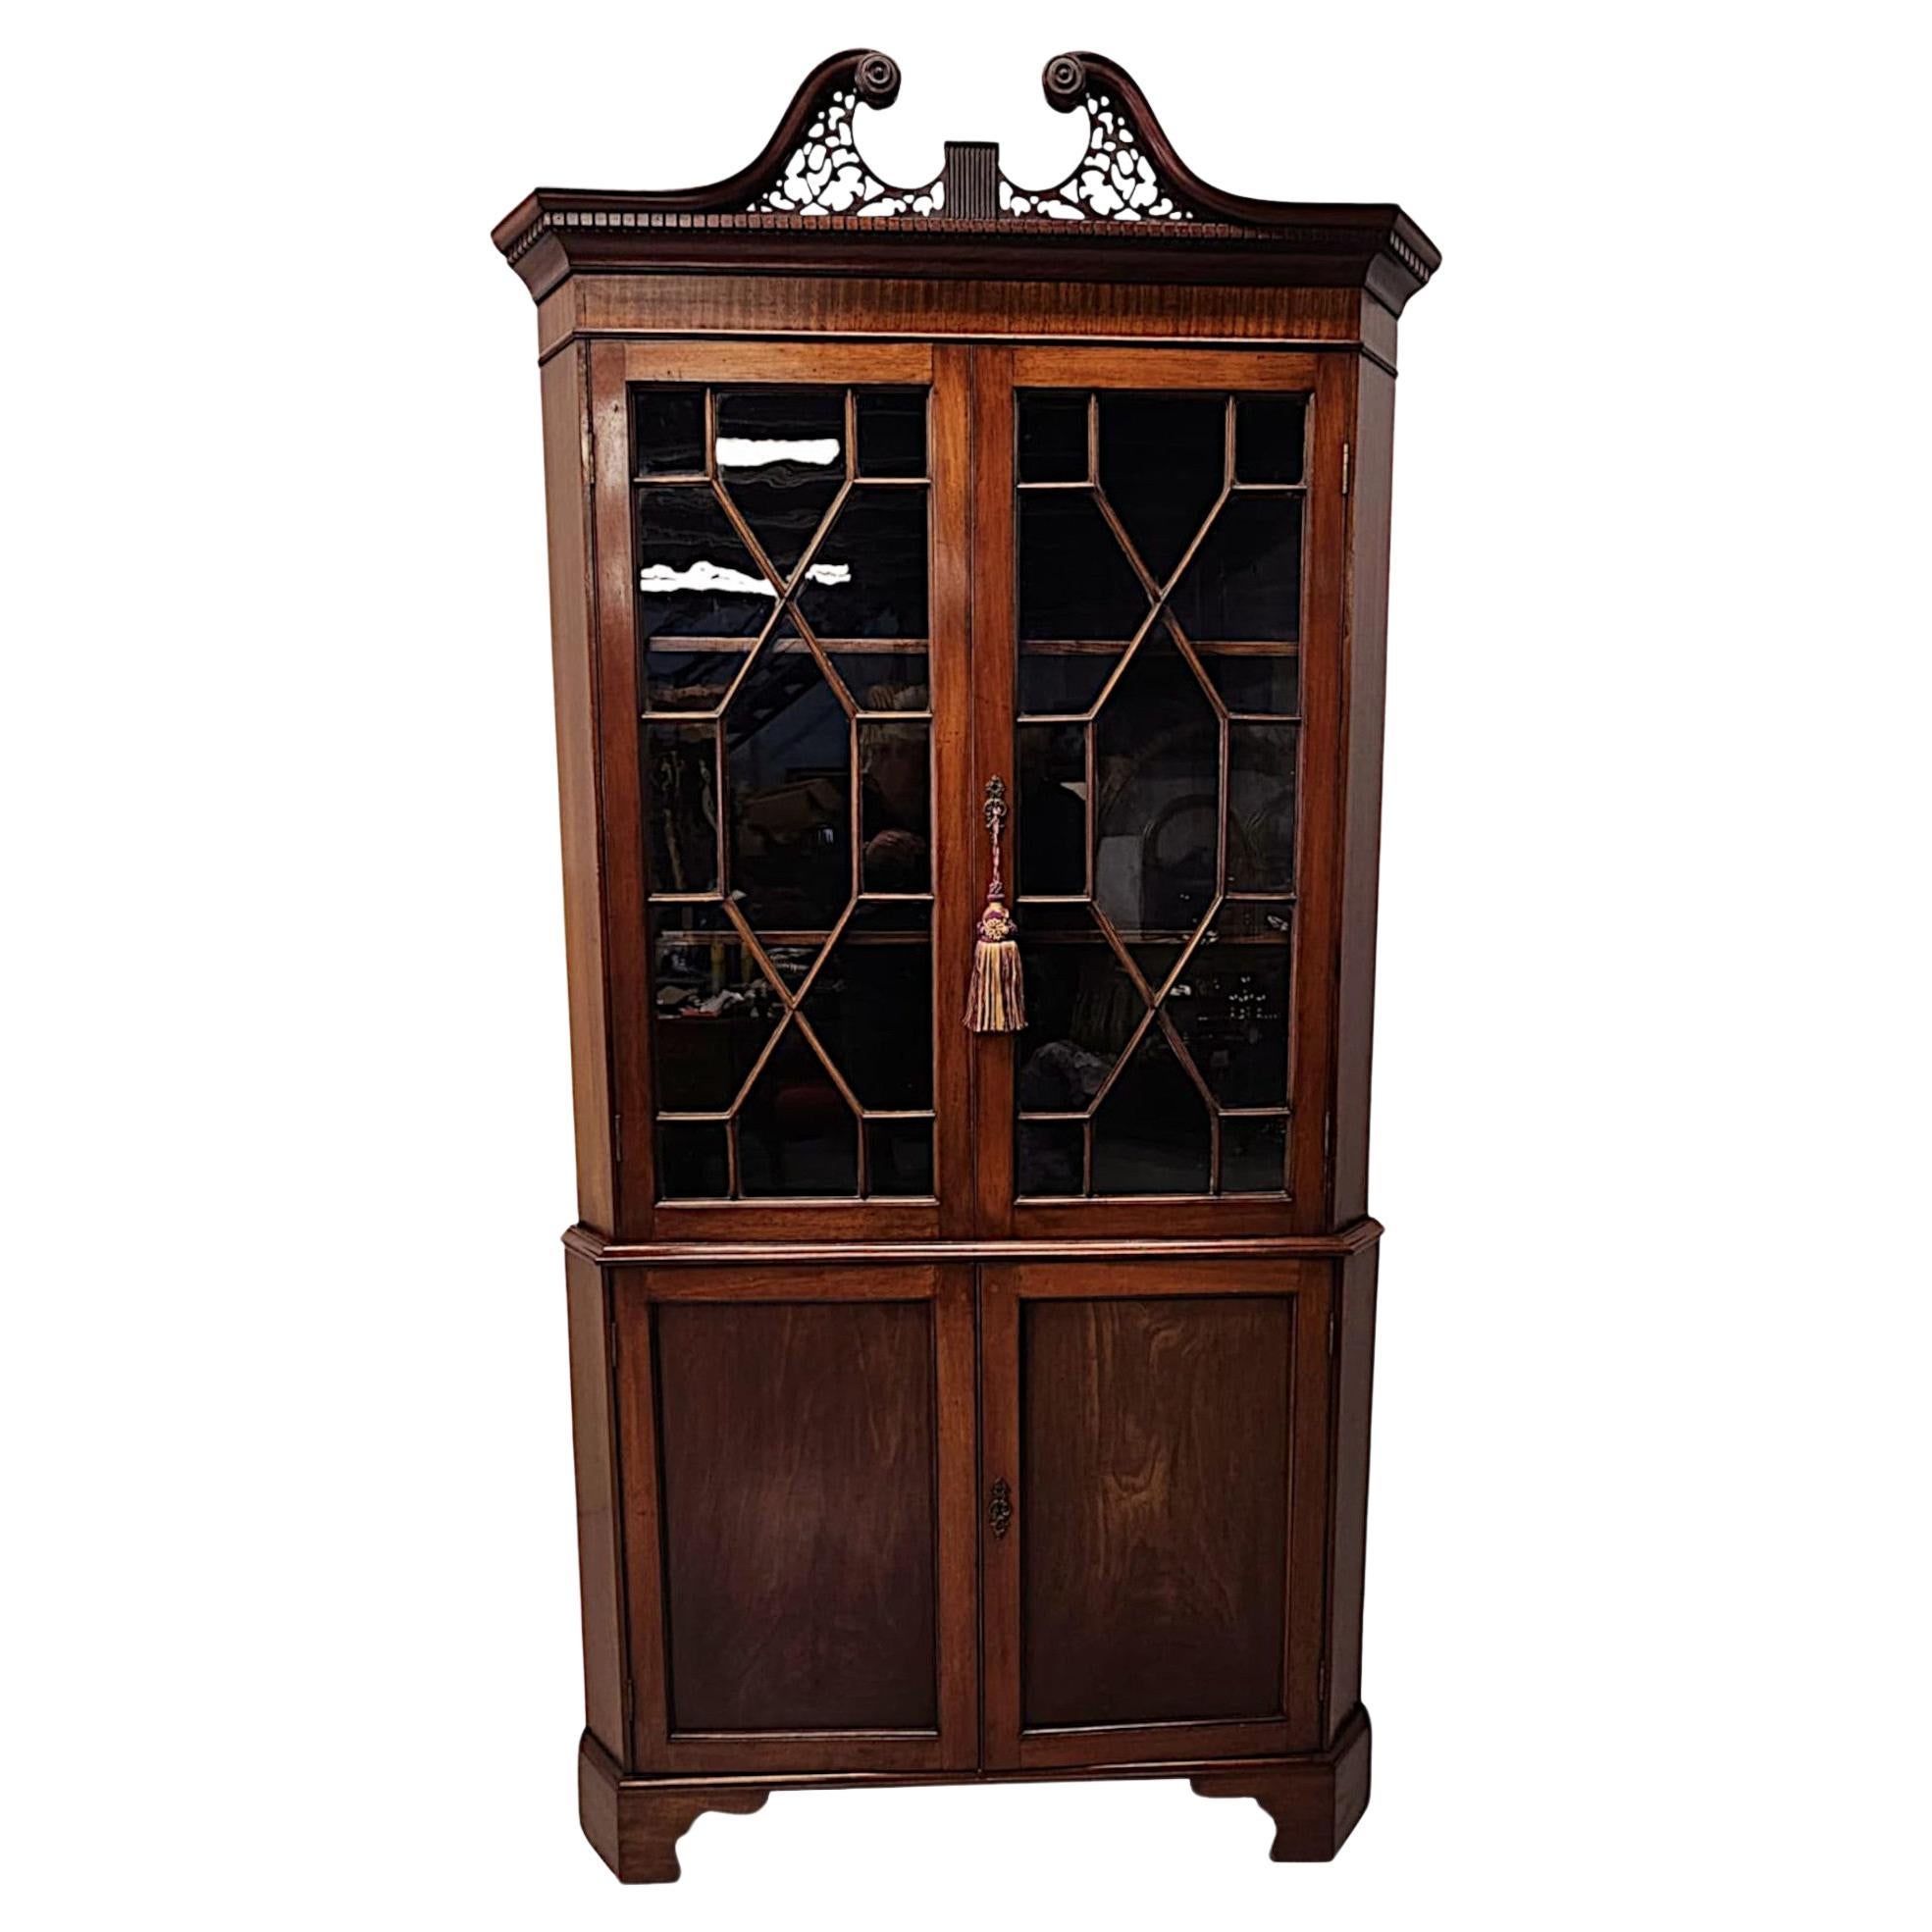 A Very Fine 19th Century Georgian Style Corner Cabinet For Sale